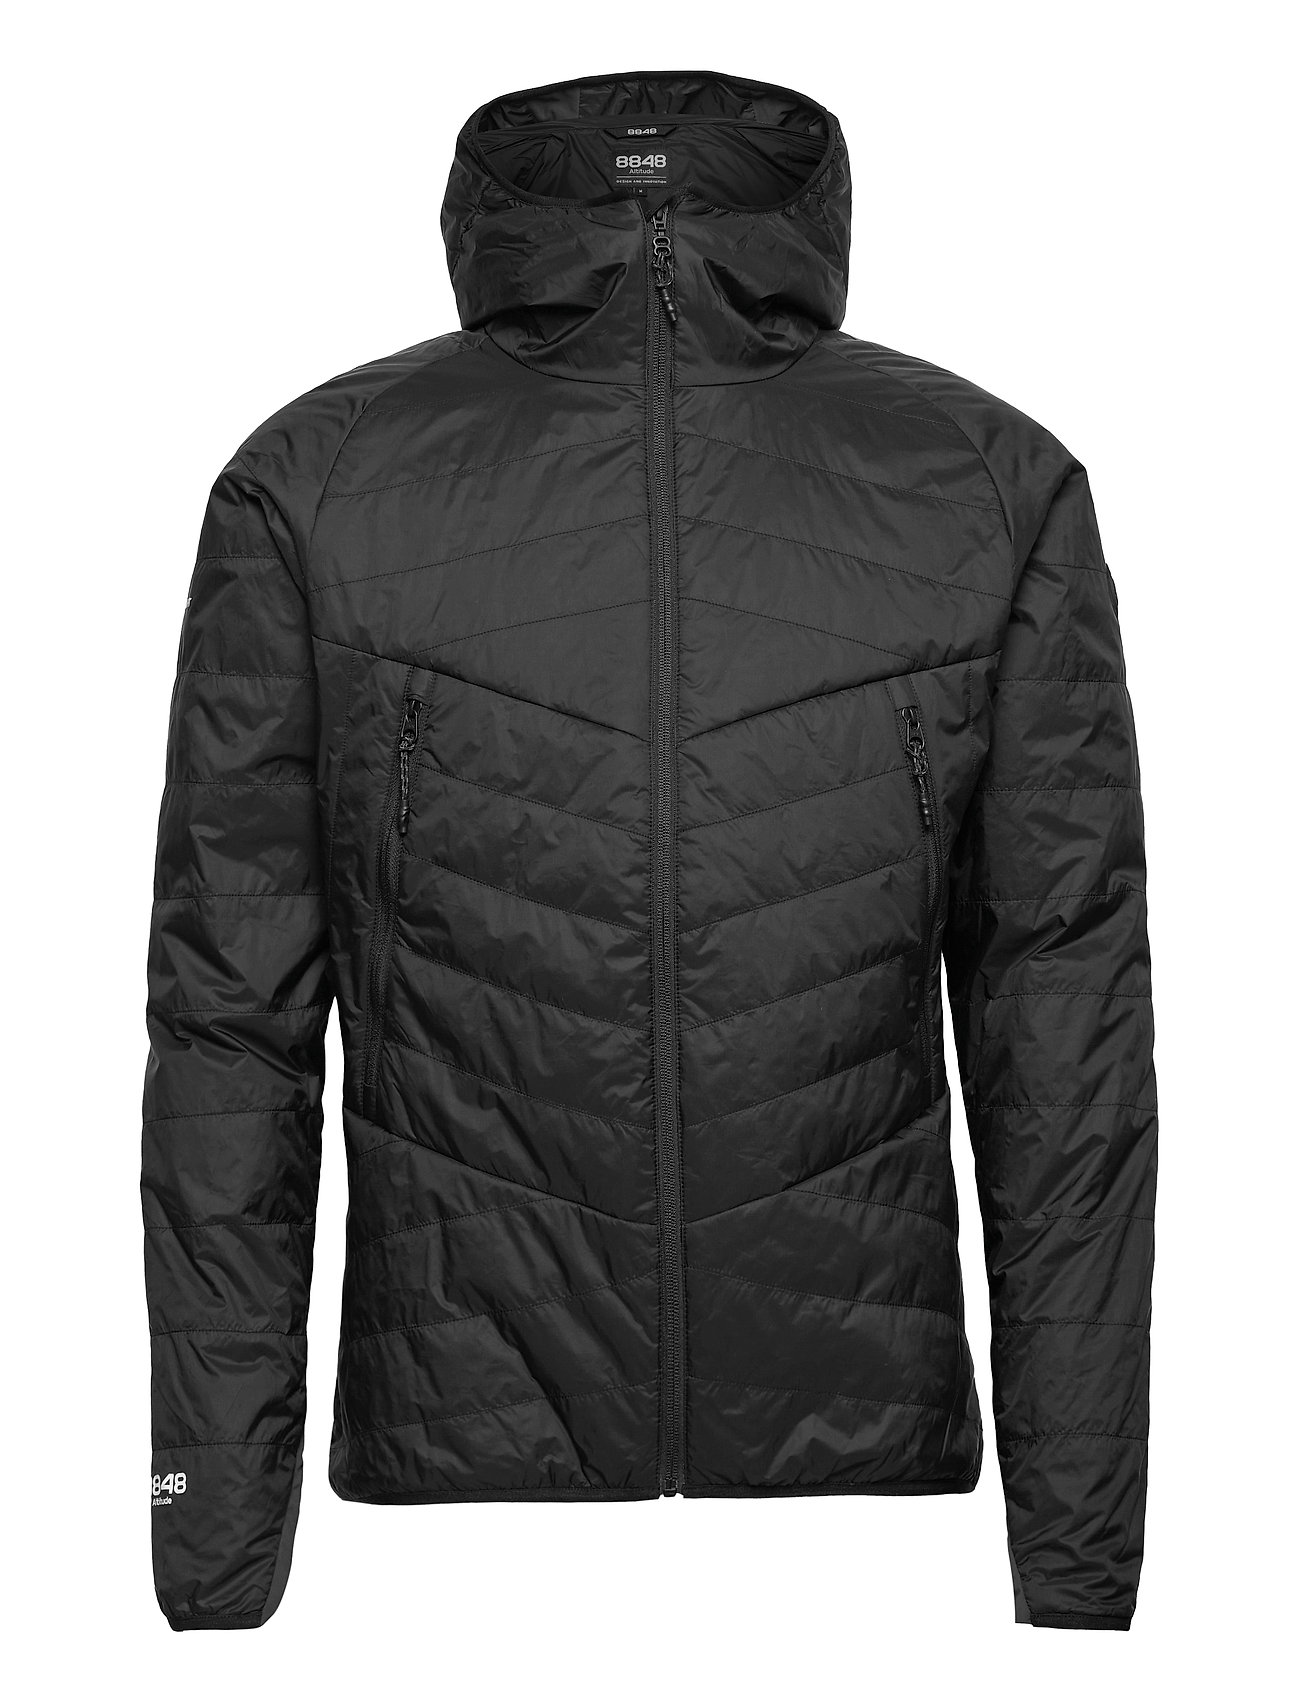 Weisshorn Liner Outerwear Sport Jackets Musta 8848 Altitude